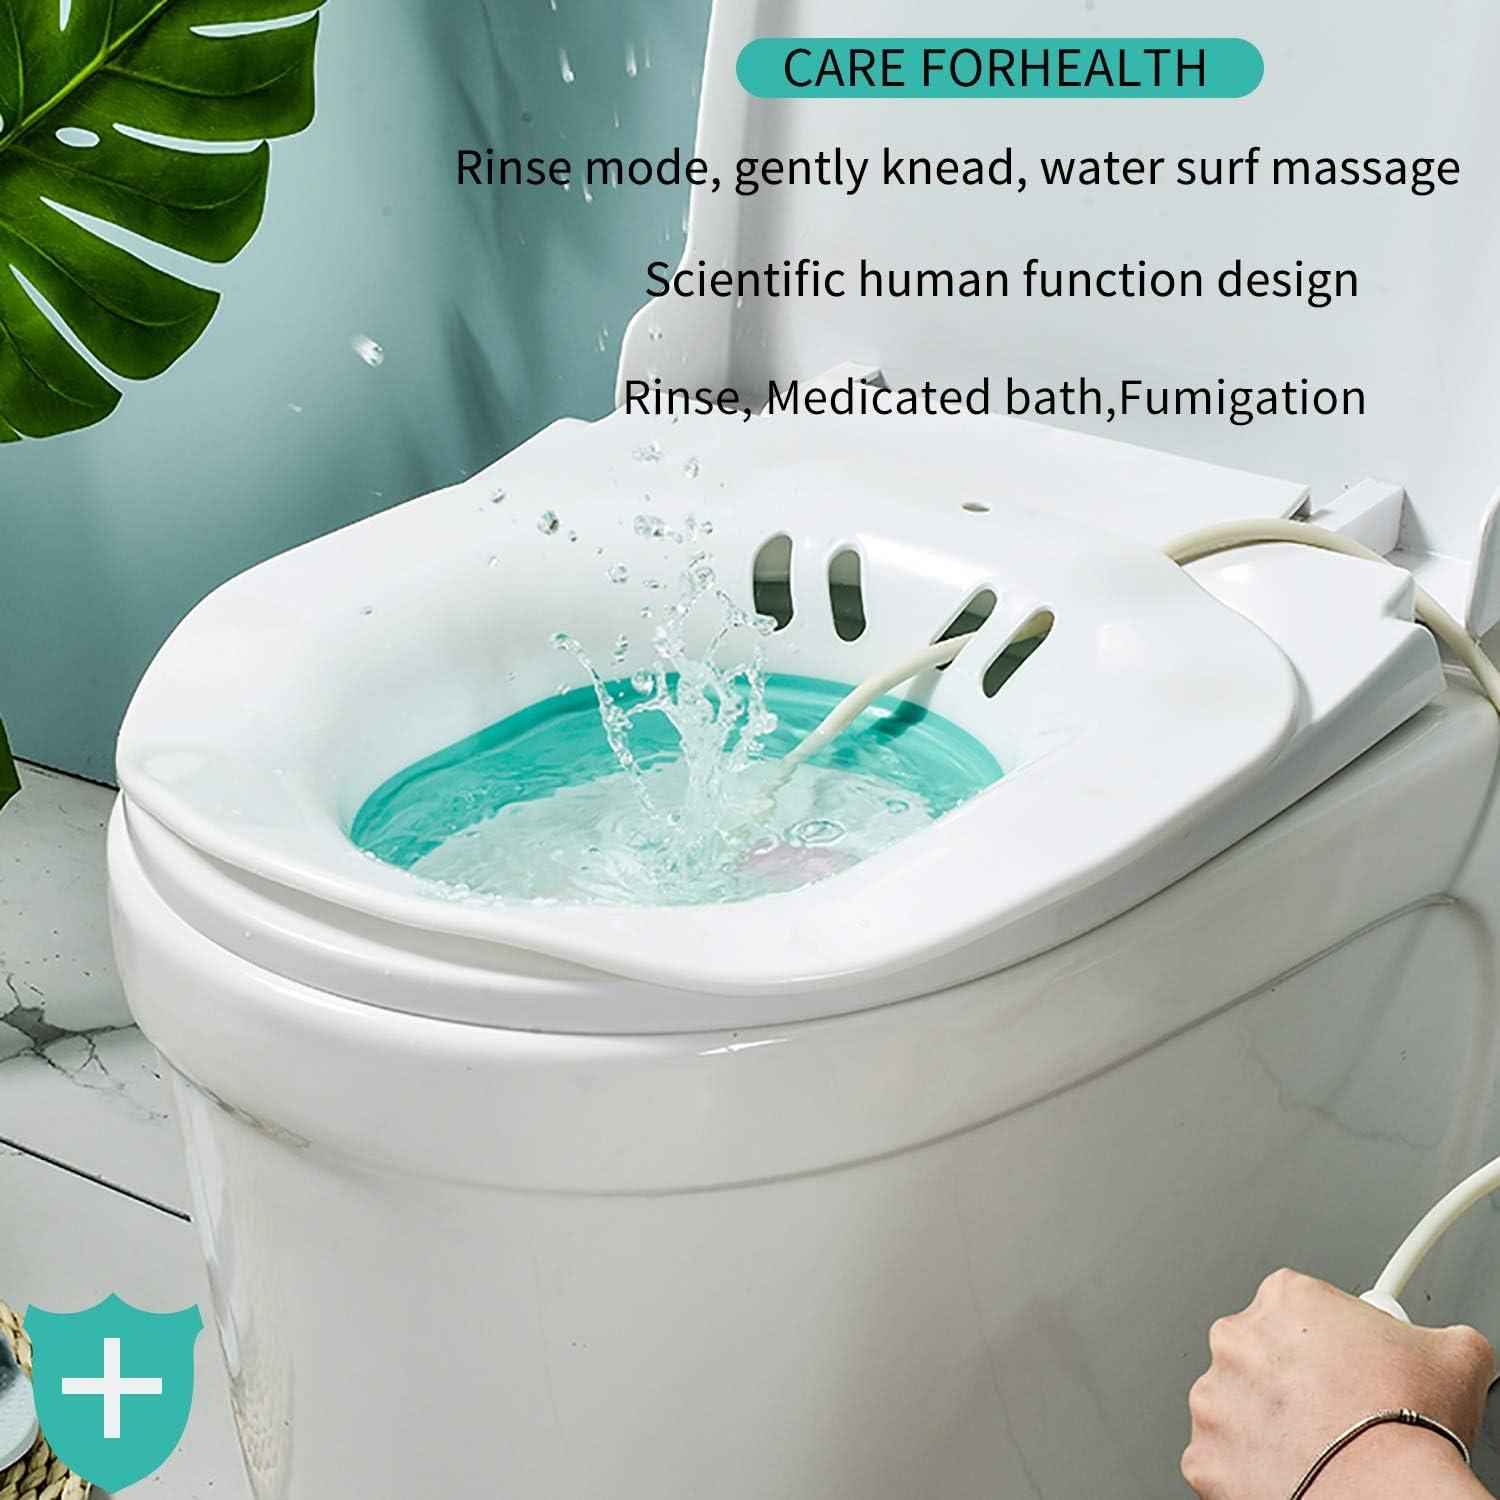 Foldable Sitz Bath for Hemorrhoids - Inflammation Relief